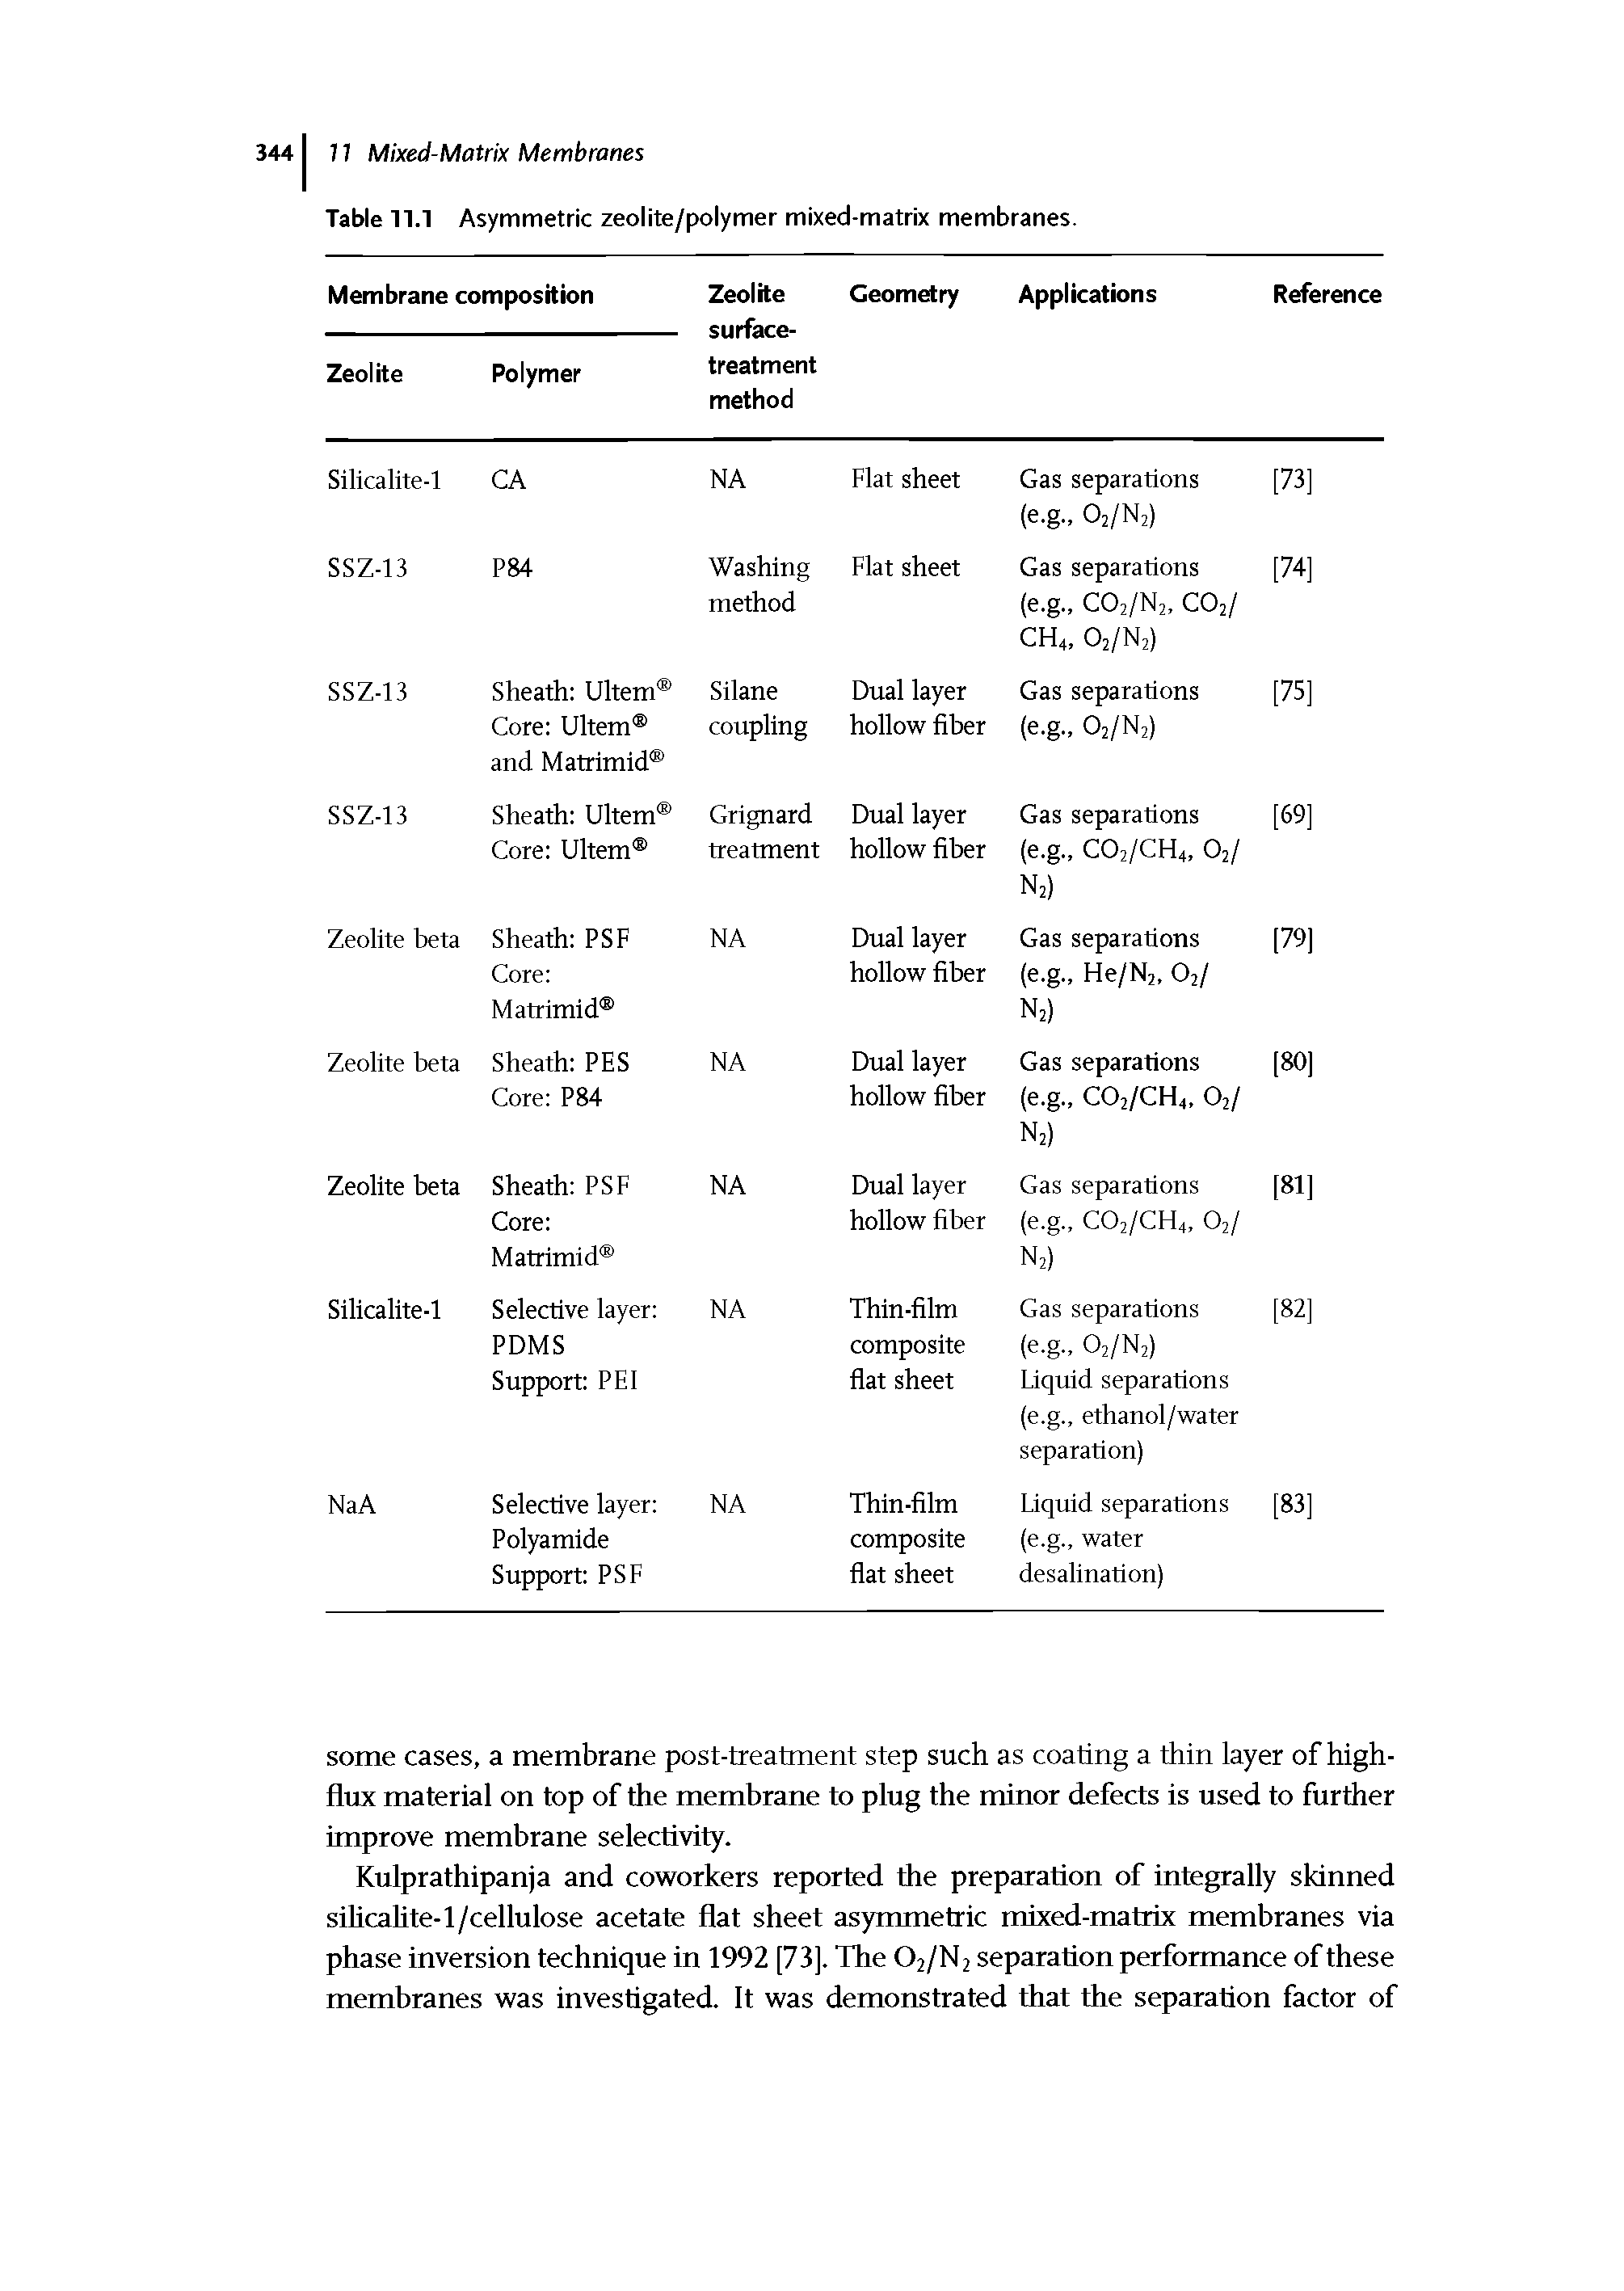 Table 11.1 Asymmetric zeolite/polymer mixed-matrix membranes.